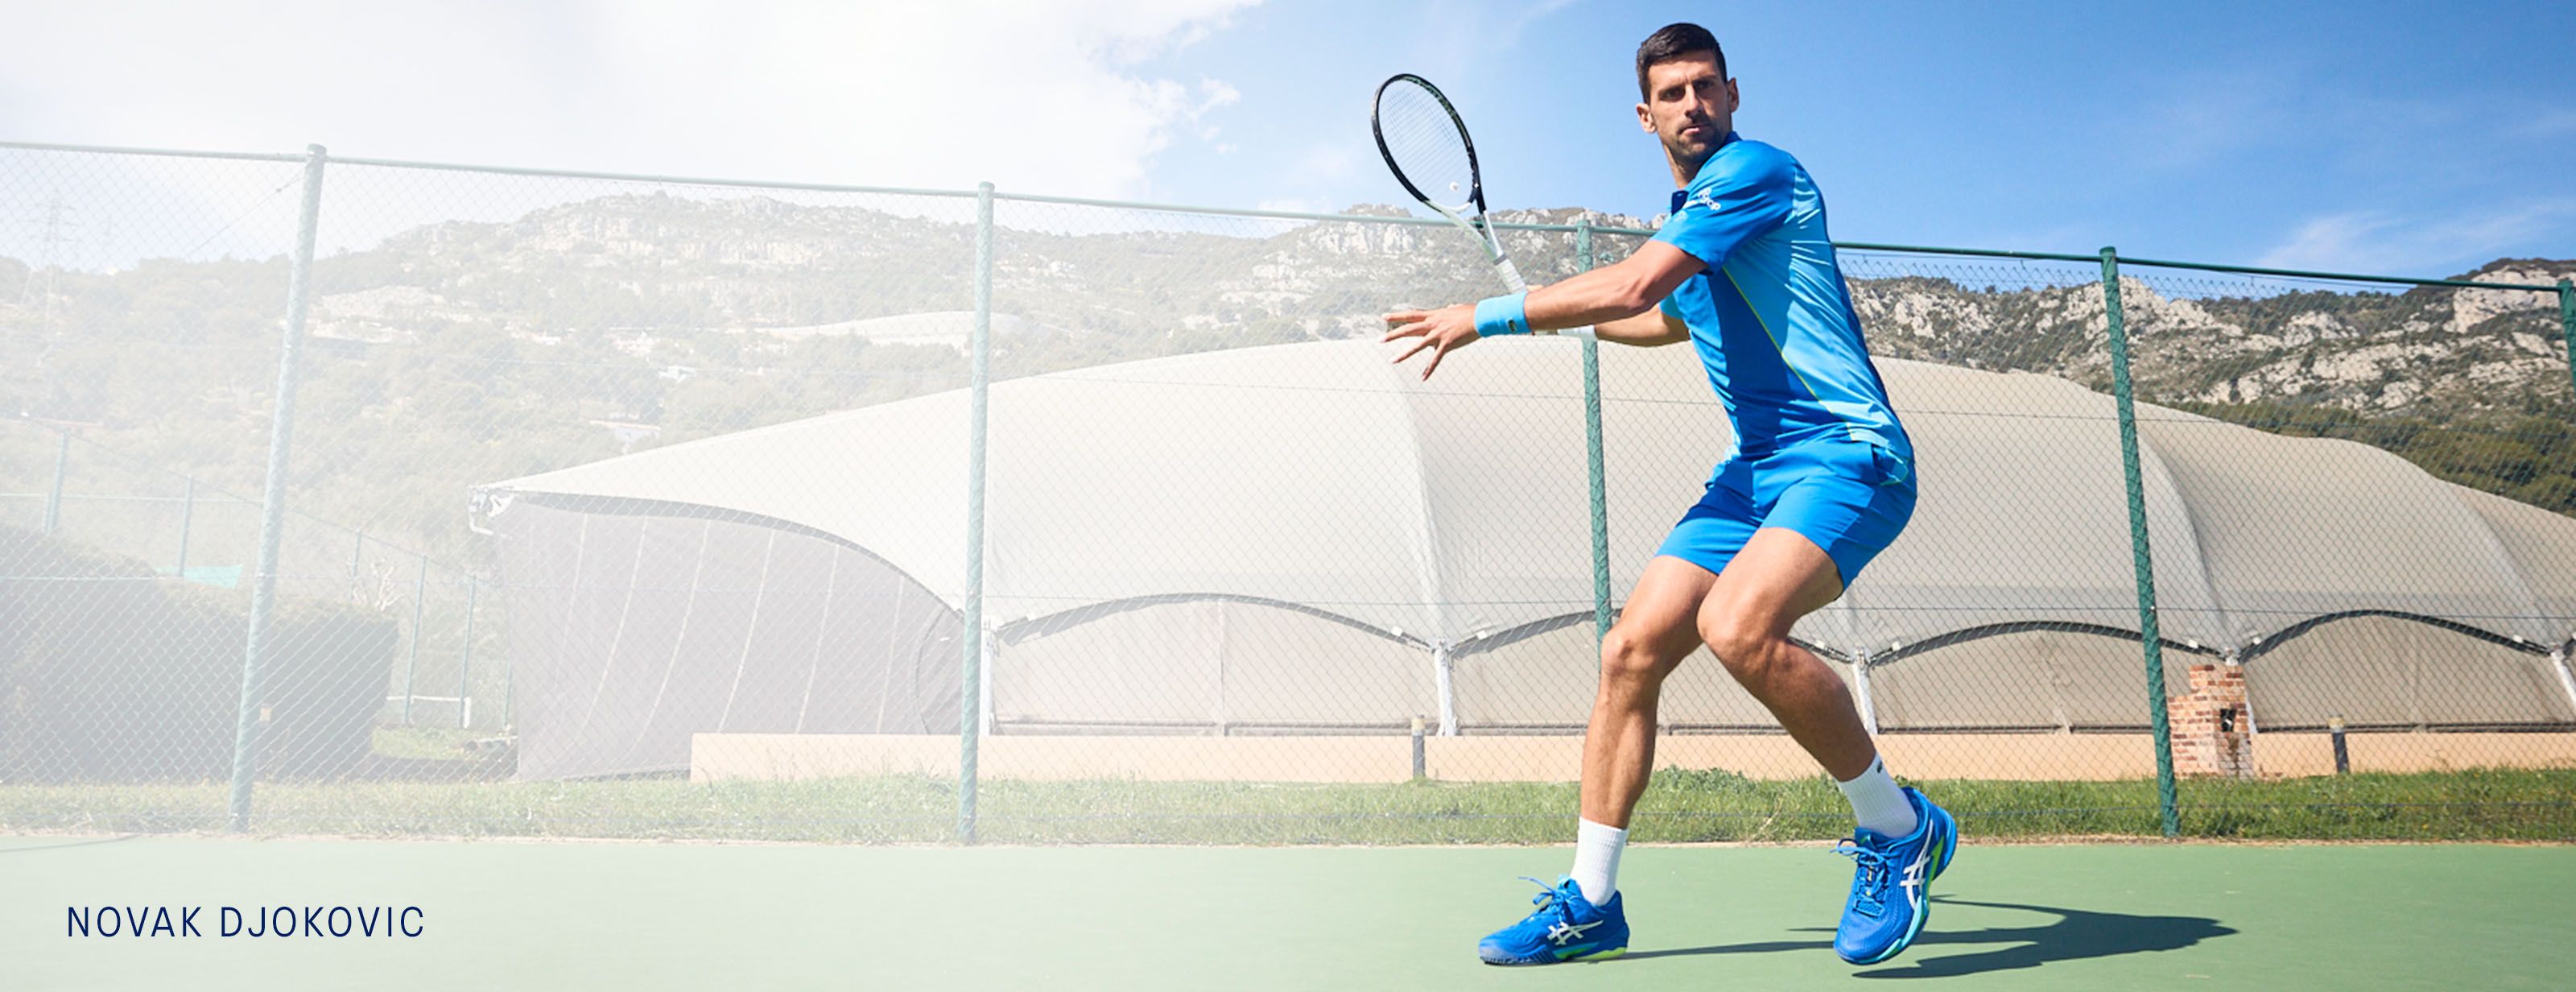 Novak Djokovic plays tennis on the hard court.